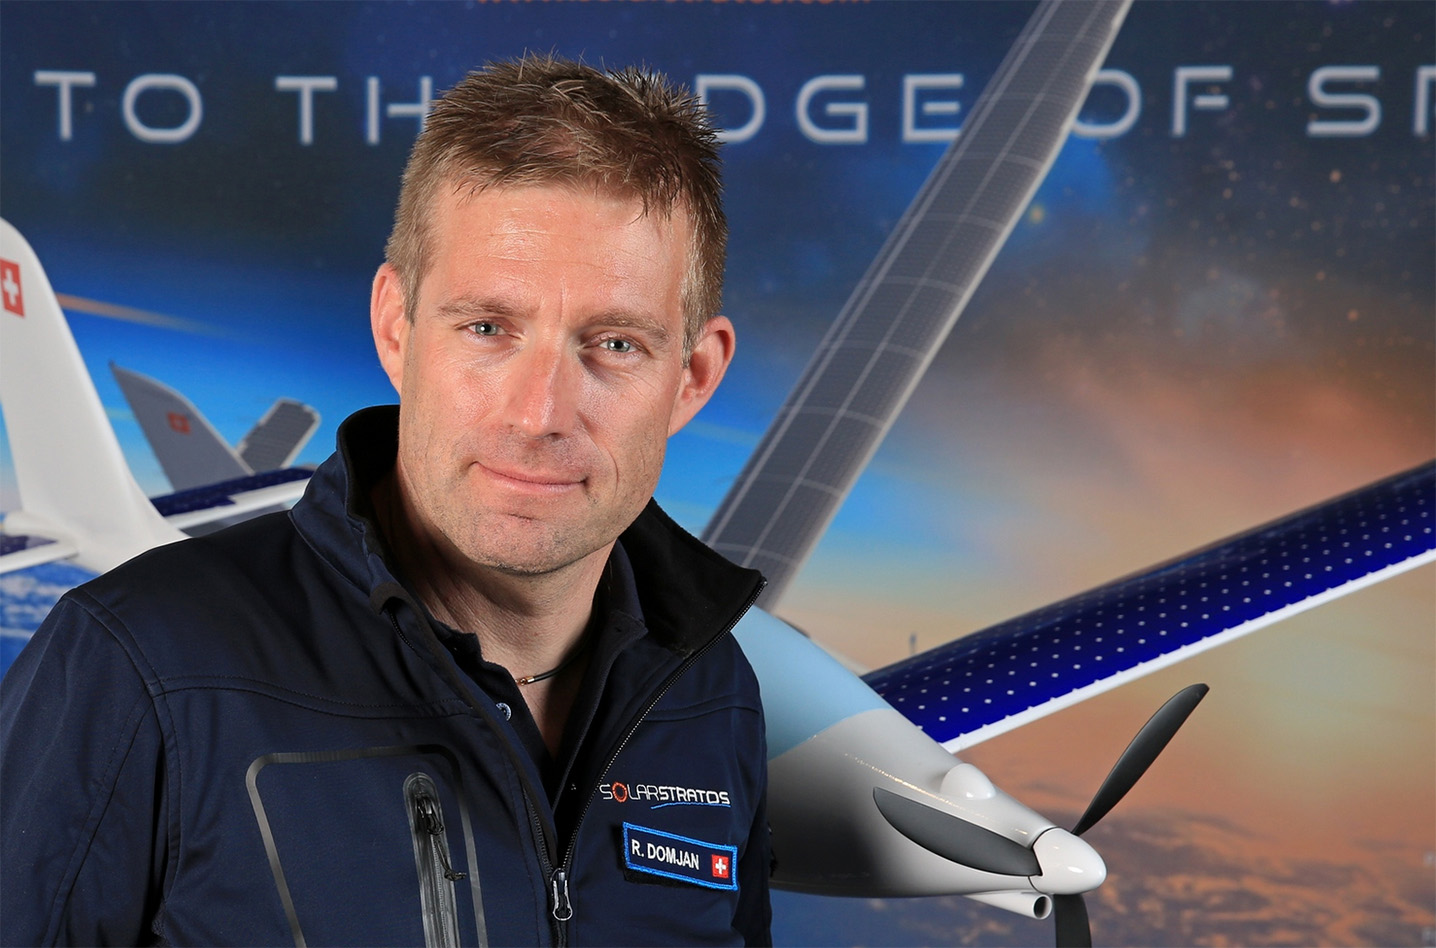 Raphael Domjan, Solar Stratos founder and pilot